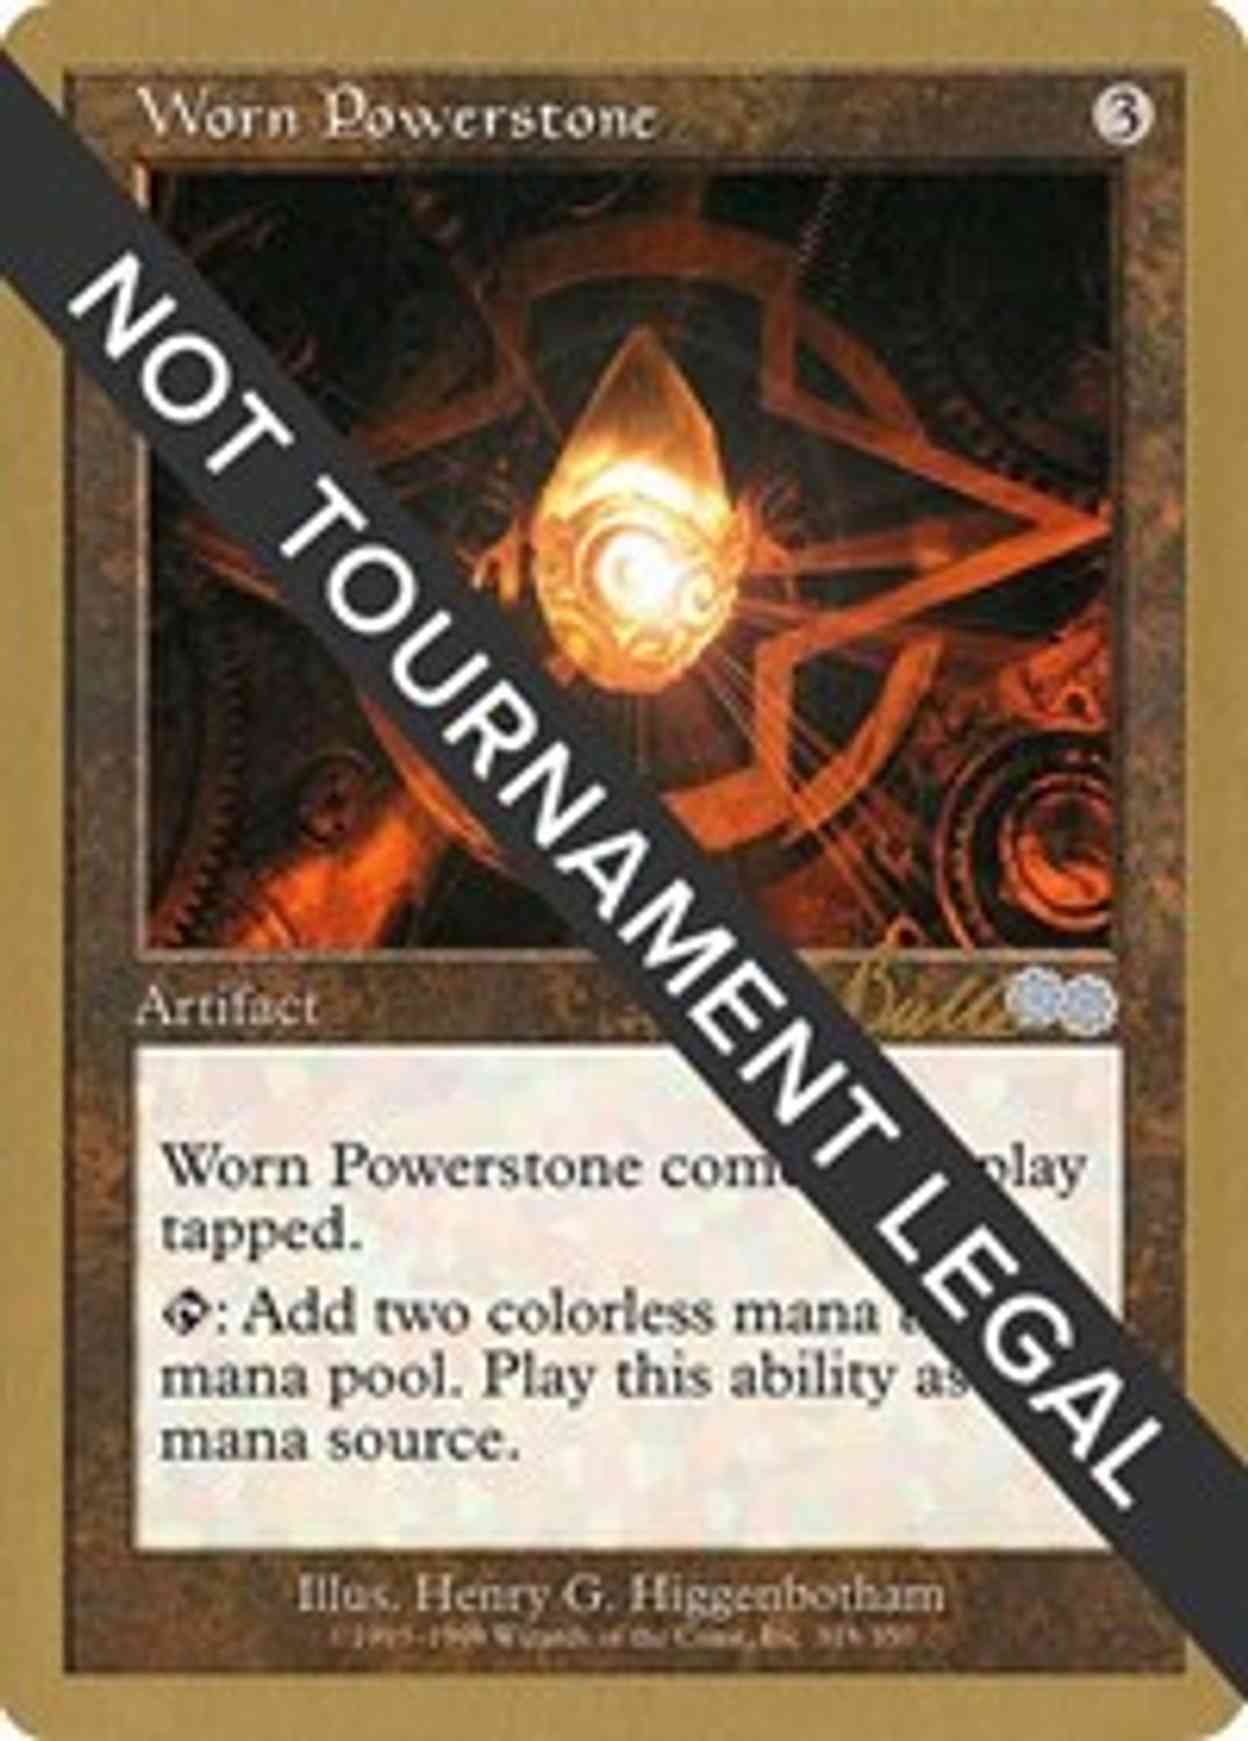 Worn Powerstone - 1999 Kai Budde (USG) magic card front